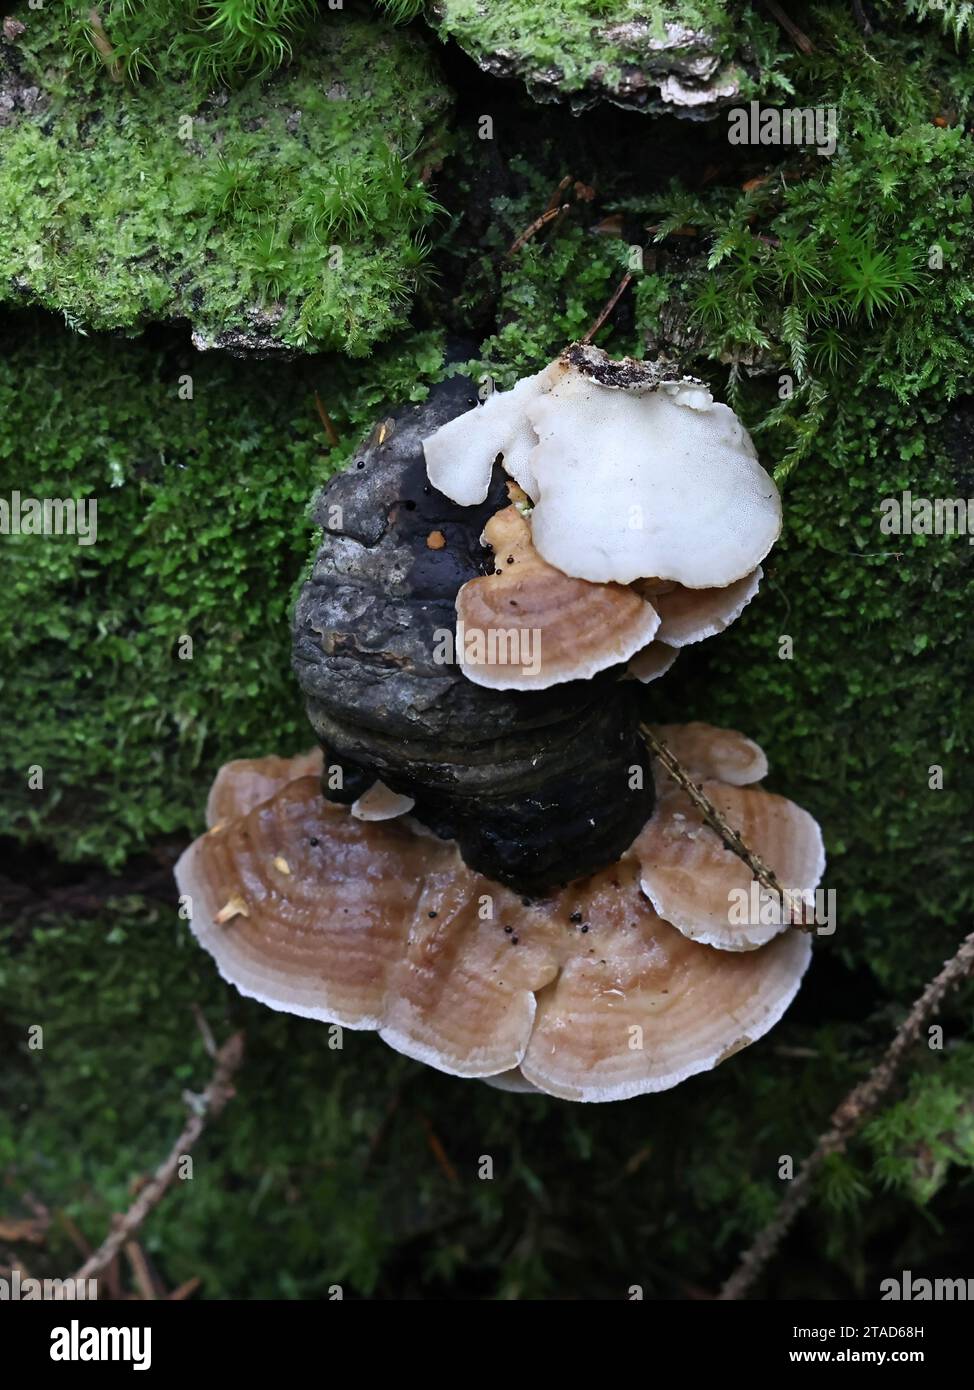 Antrodiella pallescens, a polypore, growing on tinder fungus, Fomes fomentarius Stock Photo